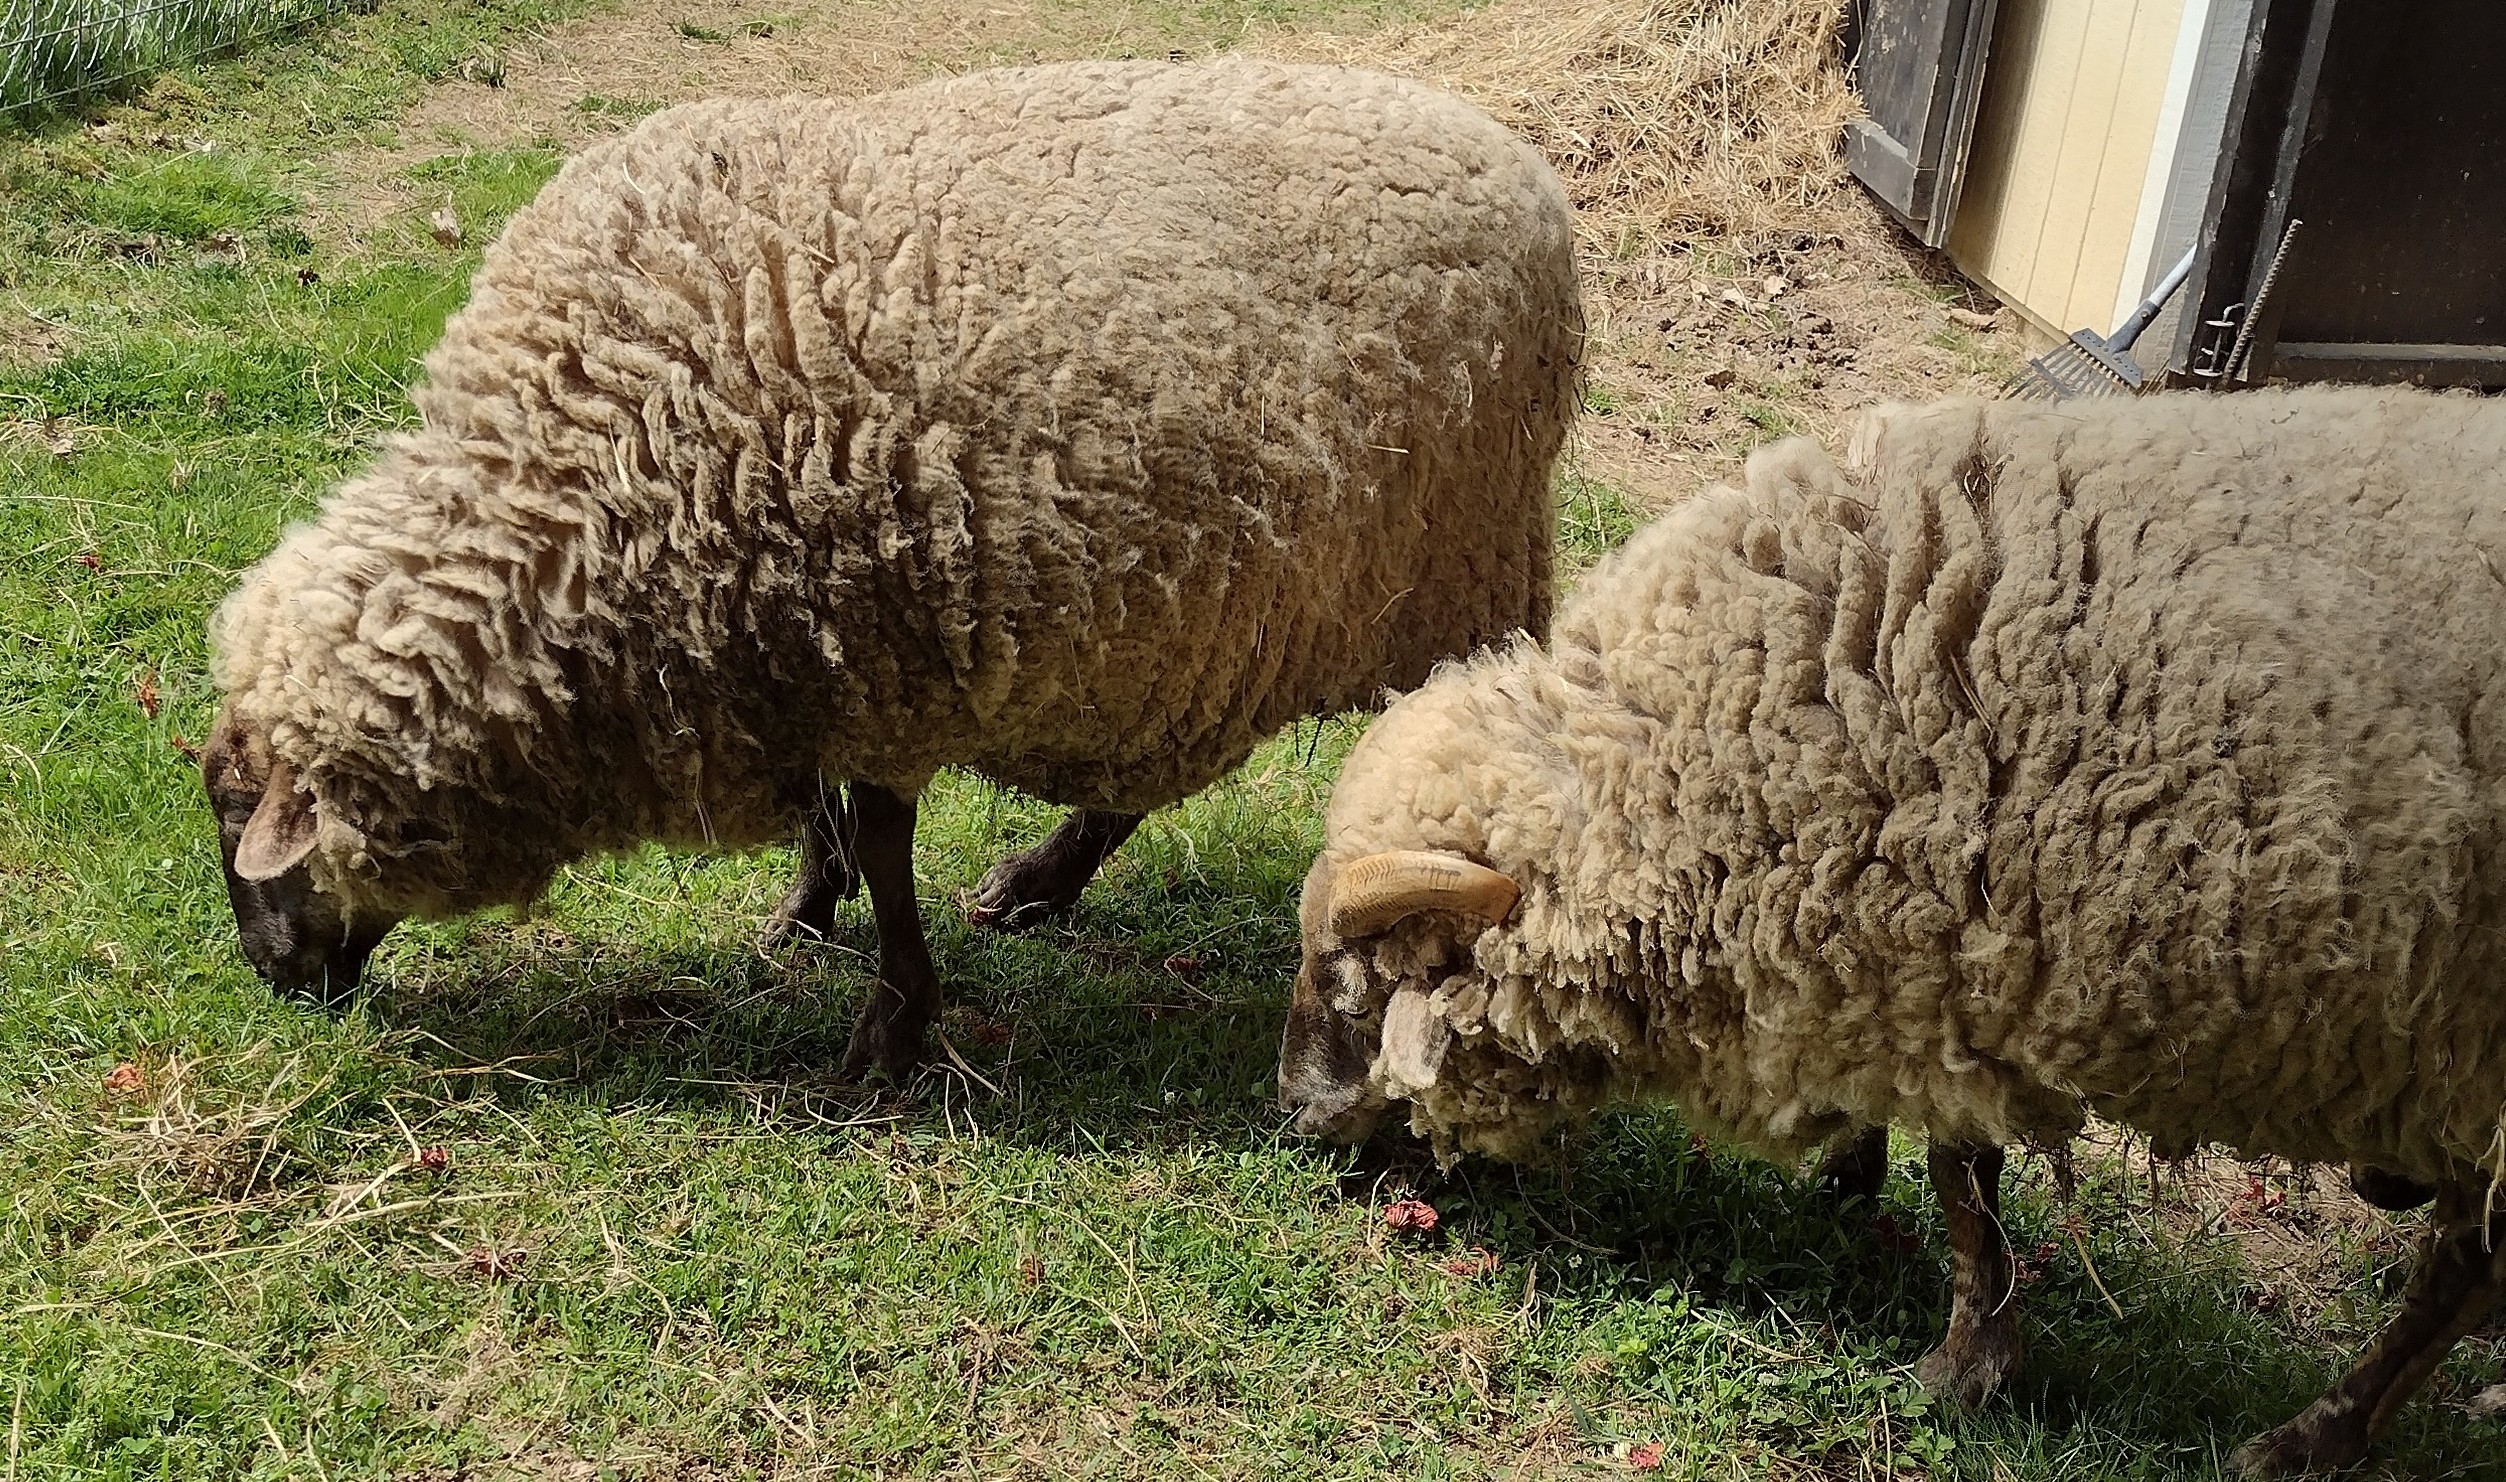 Hog island sheep â baltimore wool pany